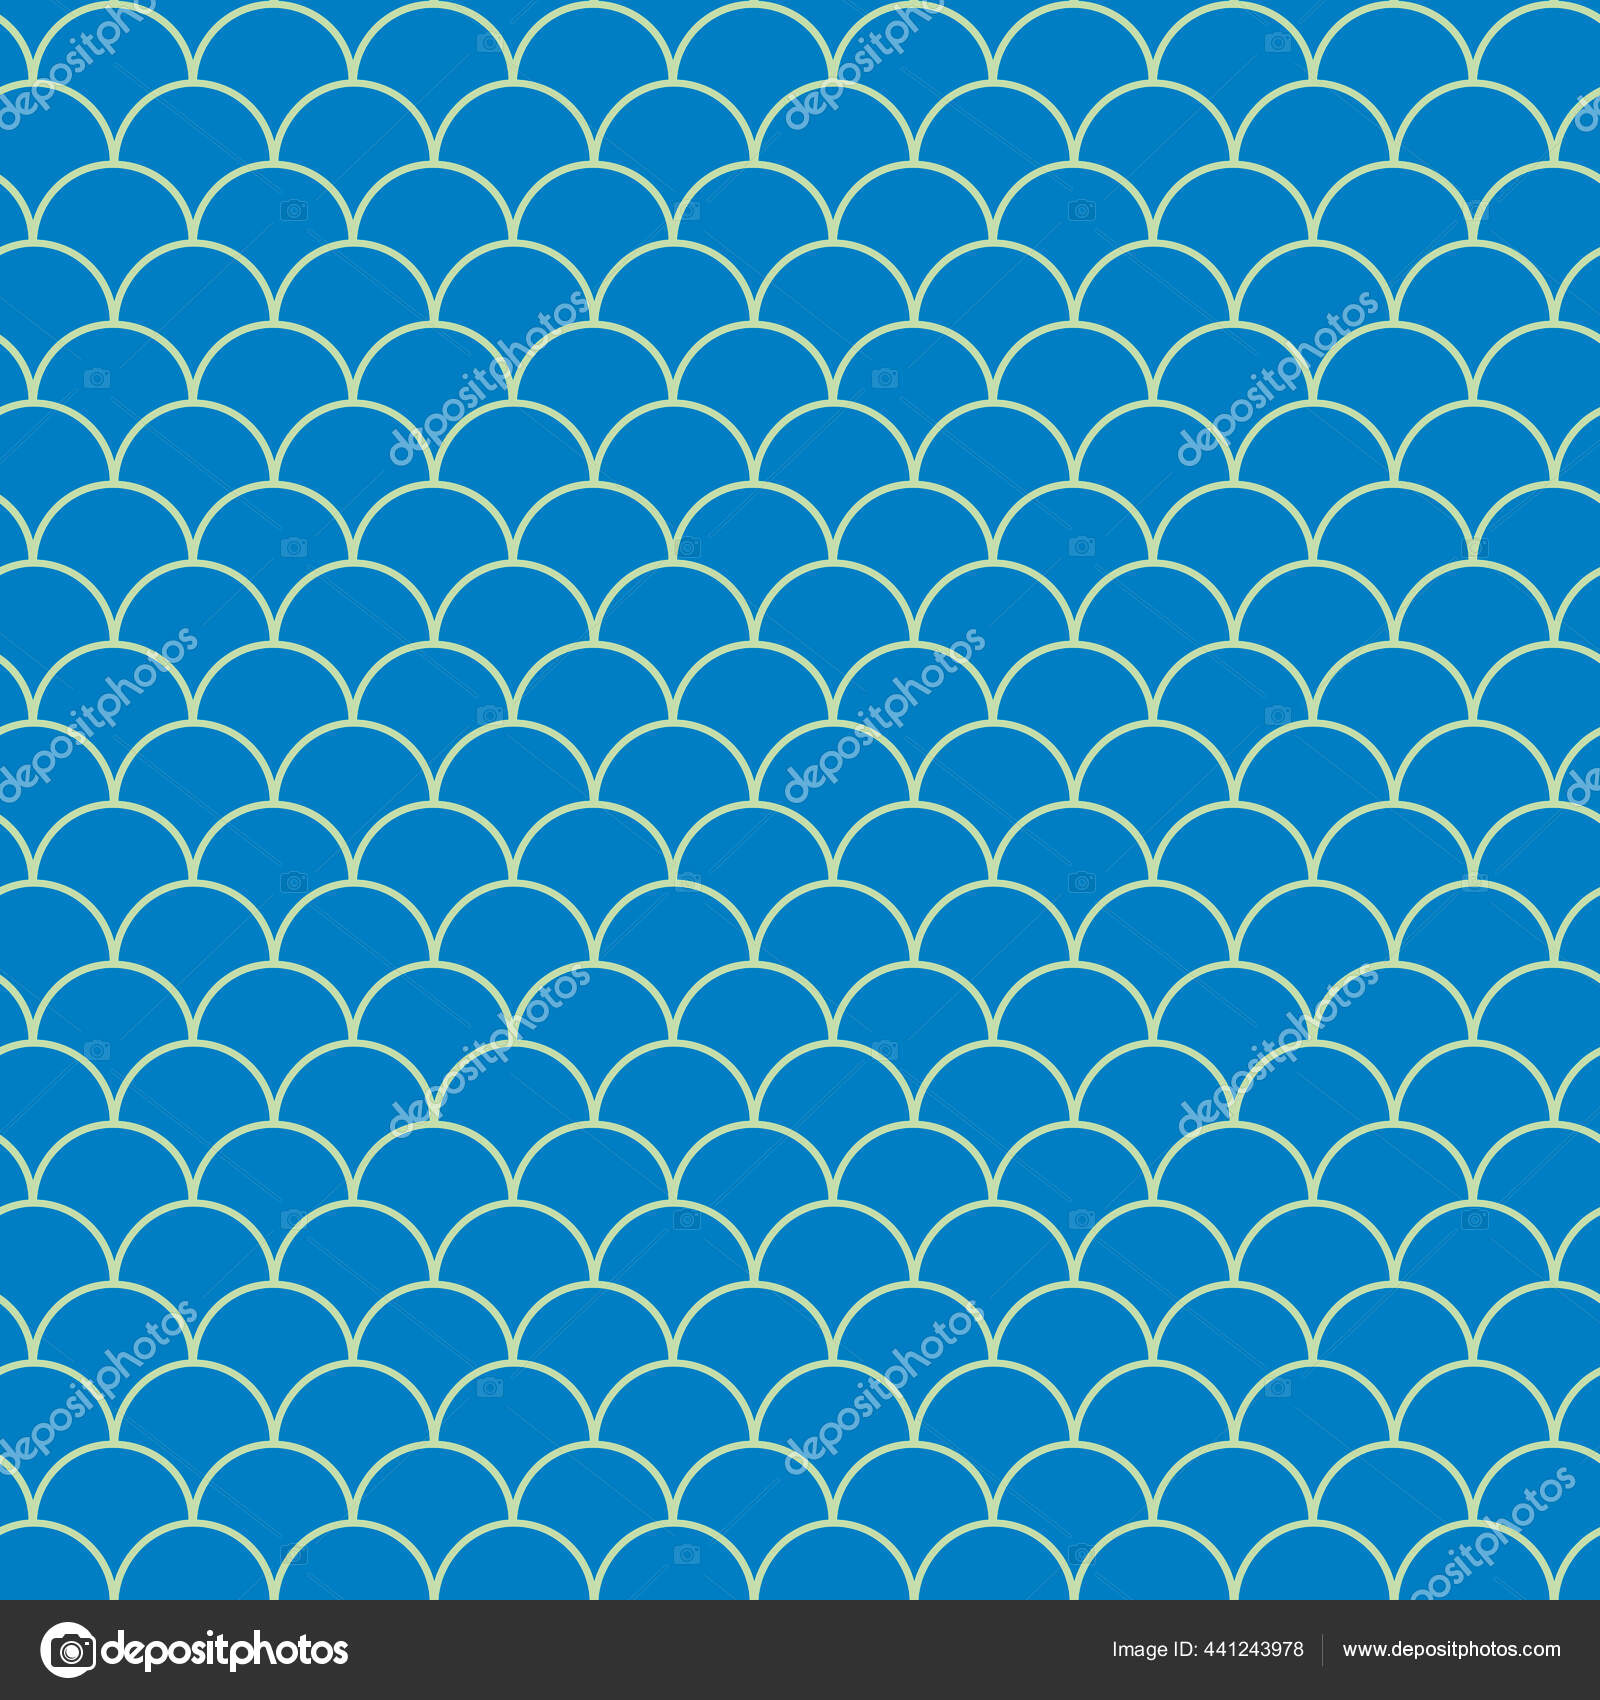 https://st2.depositphotos.com/11821474/44124/v/1600/depositphotos_441243978-stock-illustration-fish-scale-seamless-pattern-reptile.jpg